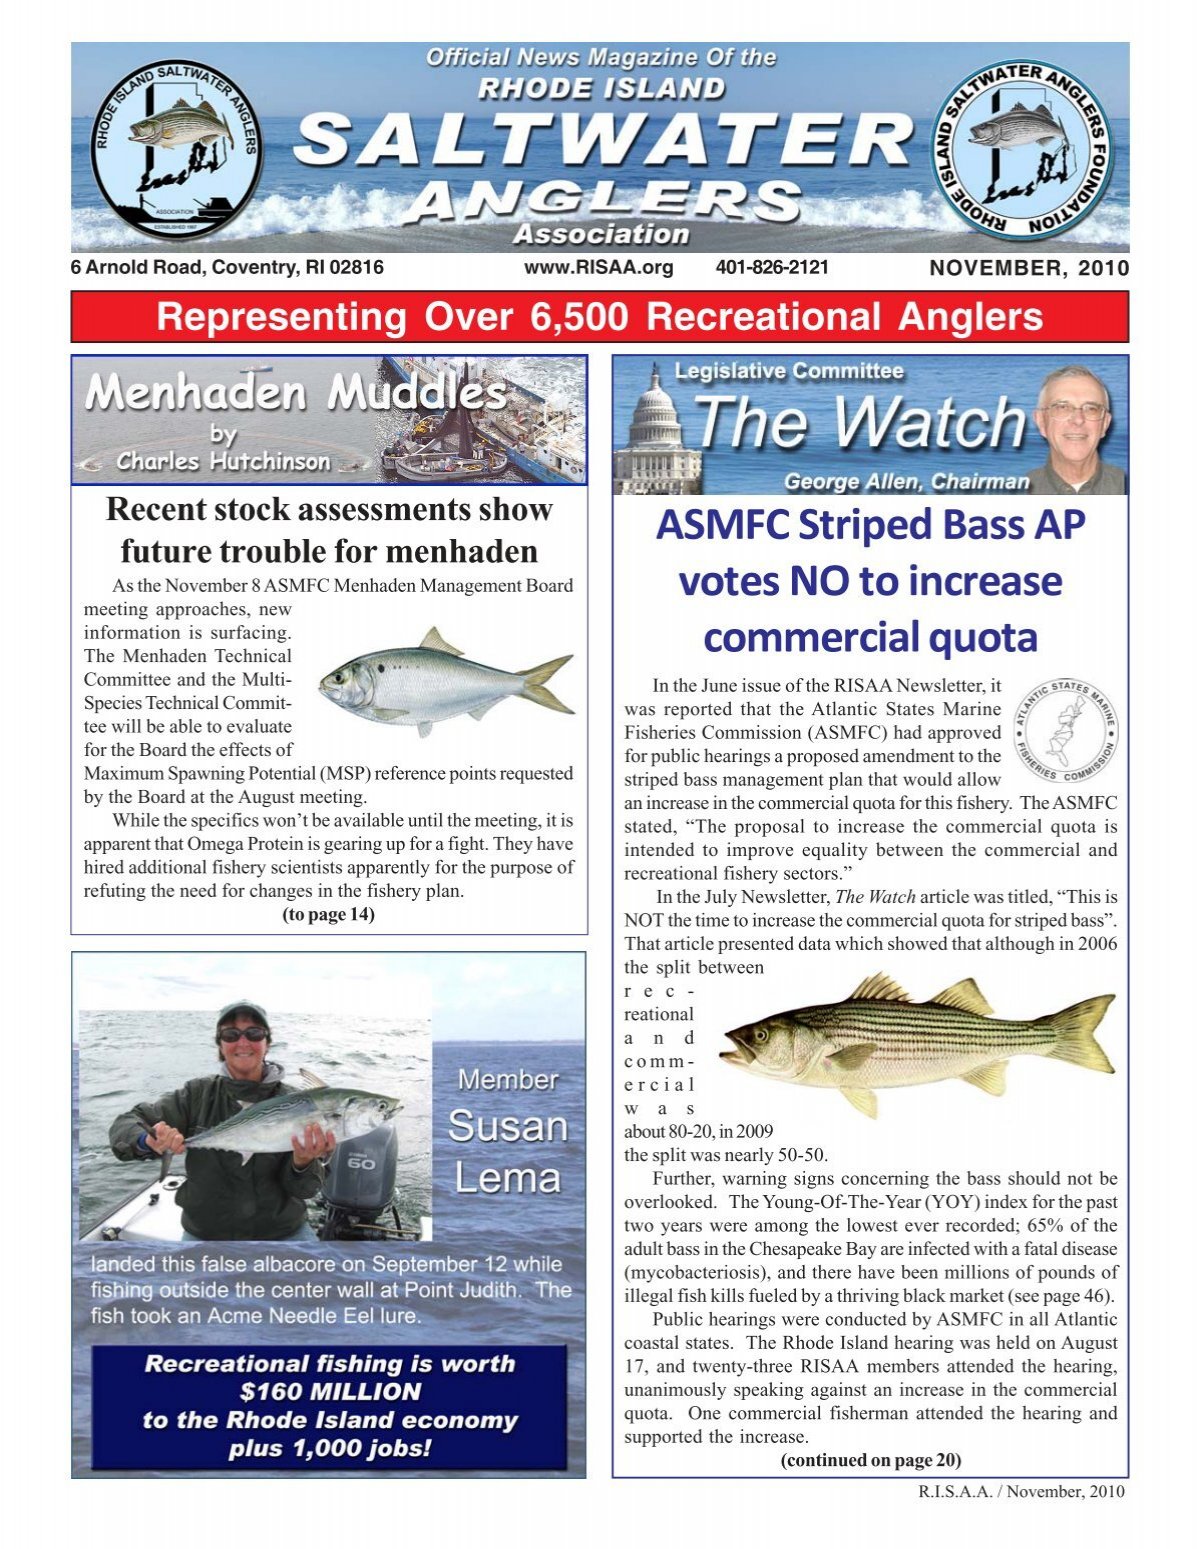 November, 2010 - The Rhode Island Saltwater Anglers Association